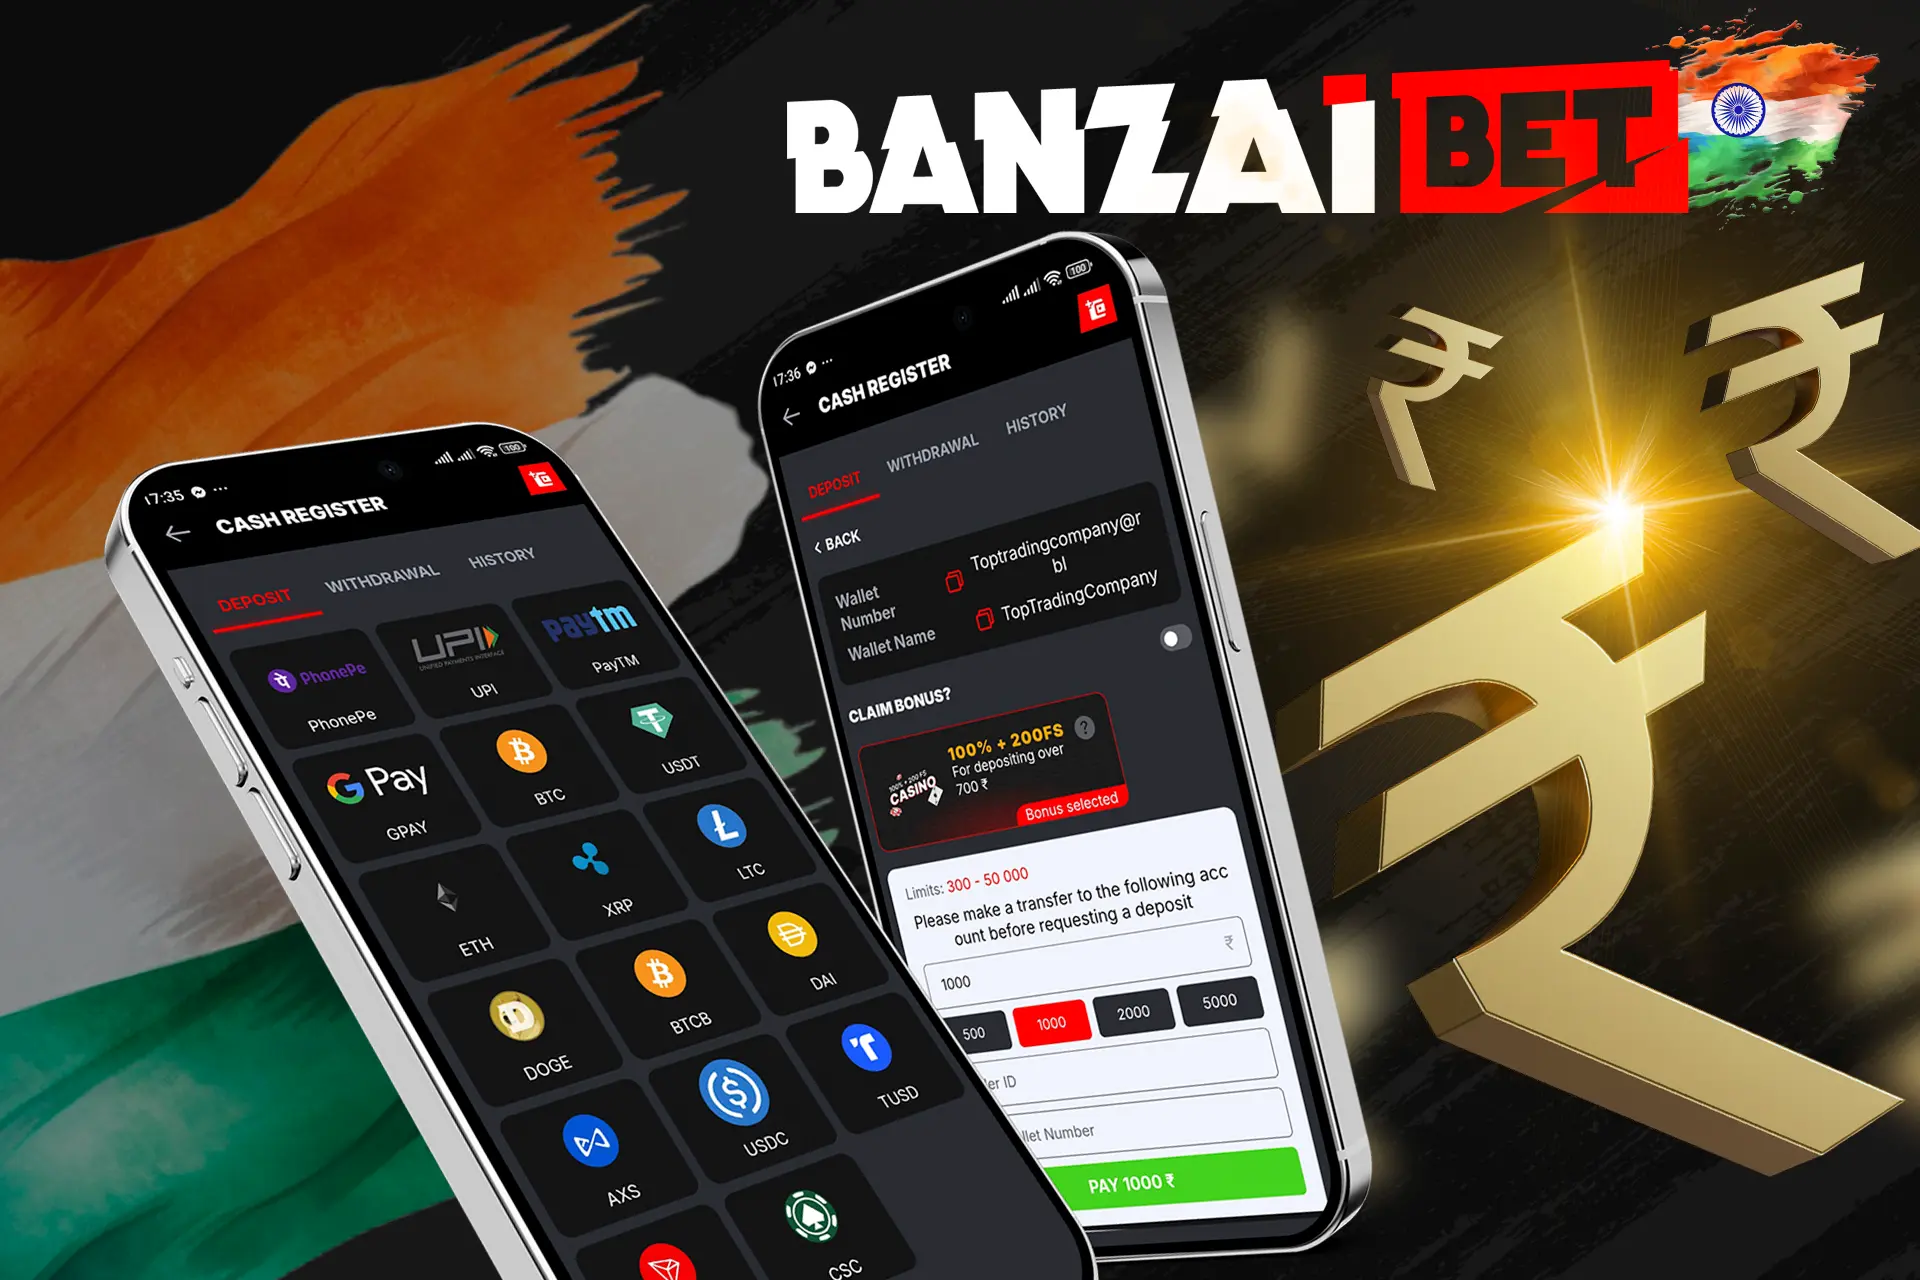 Make your first deposit at Banzaibet India